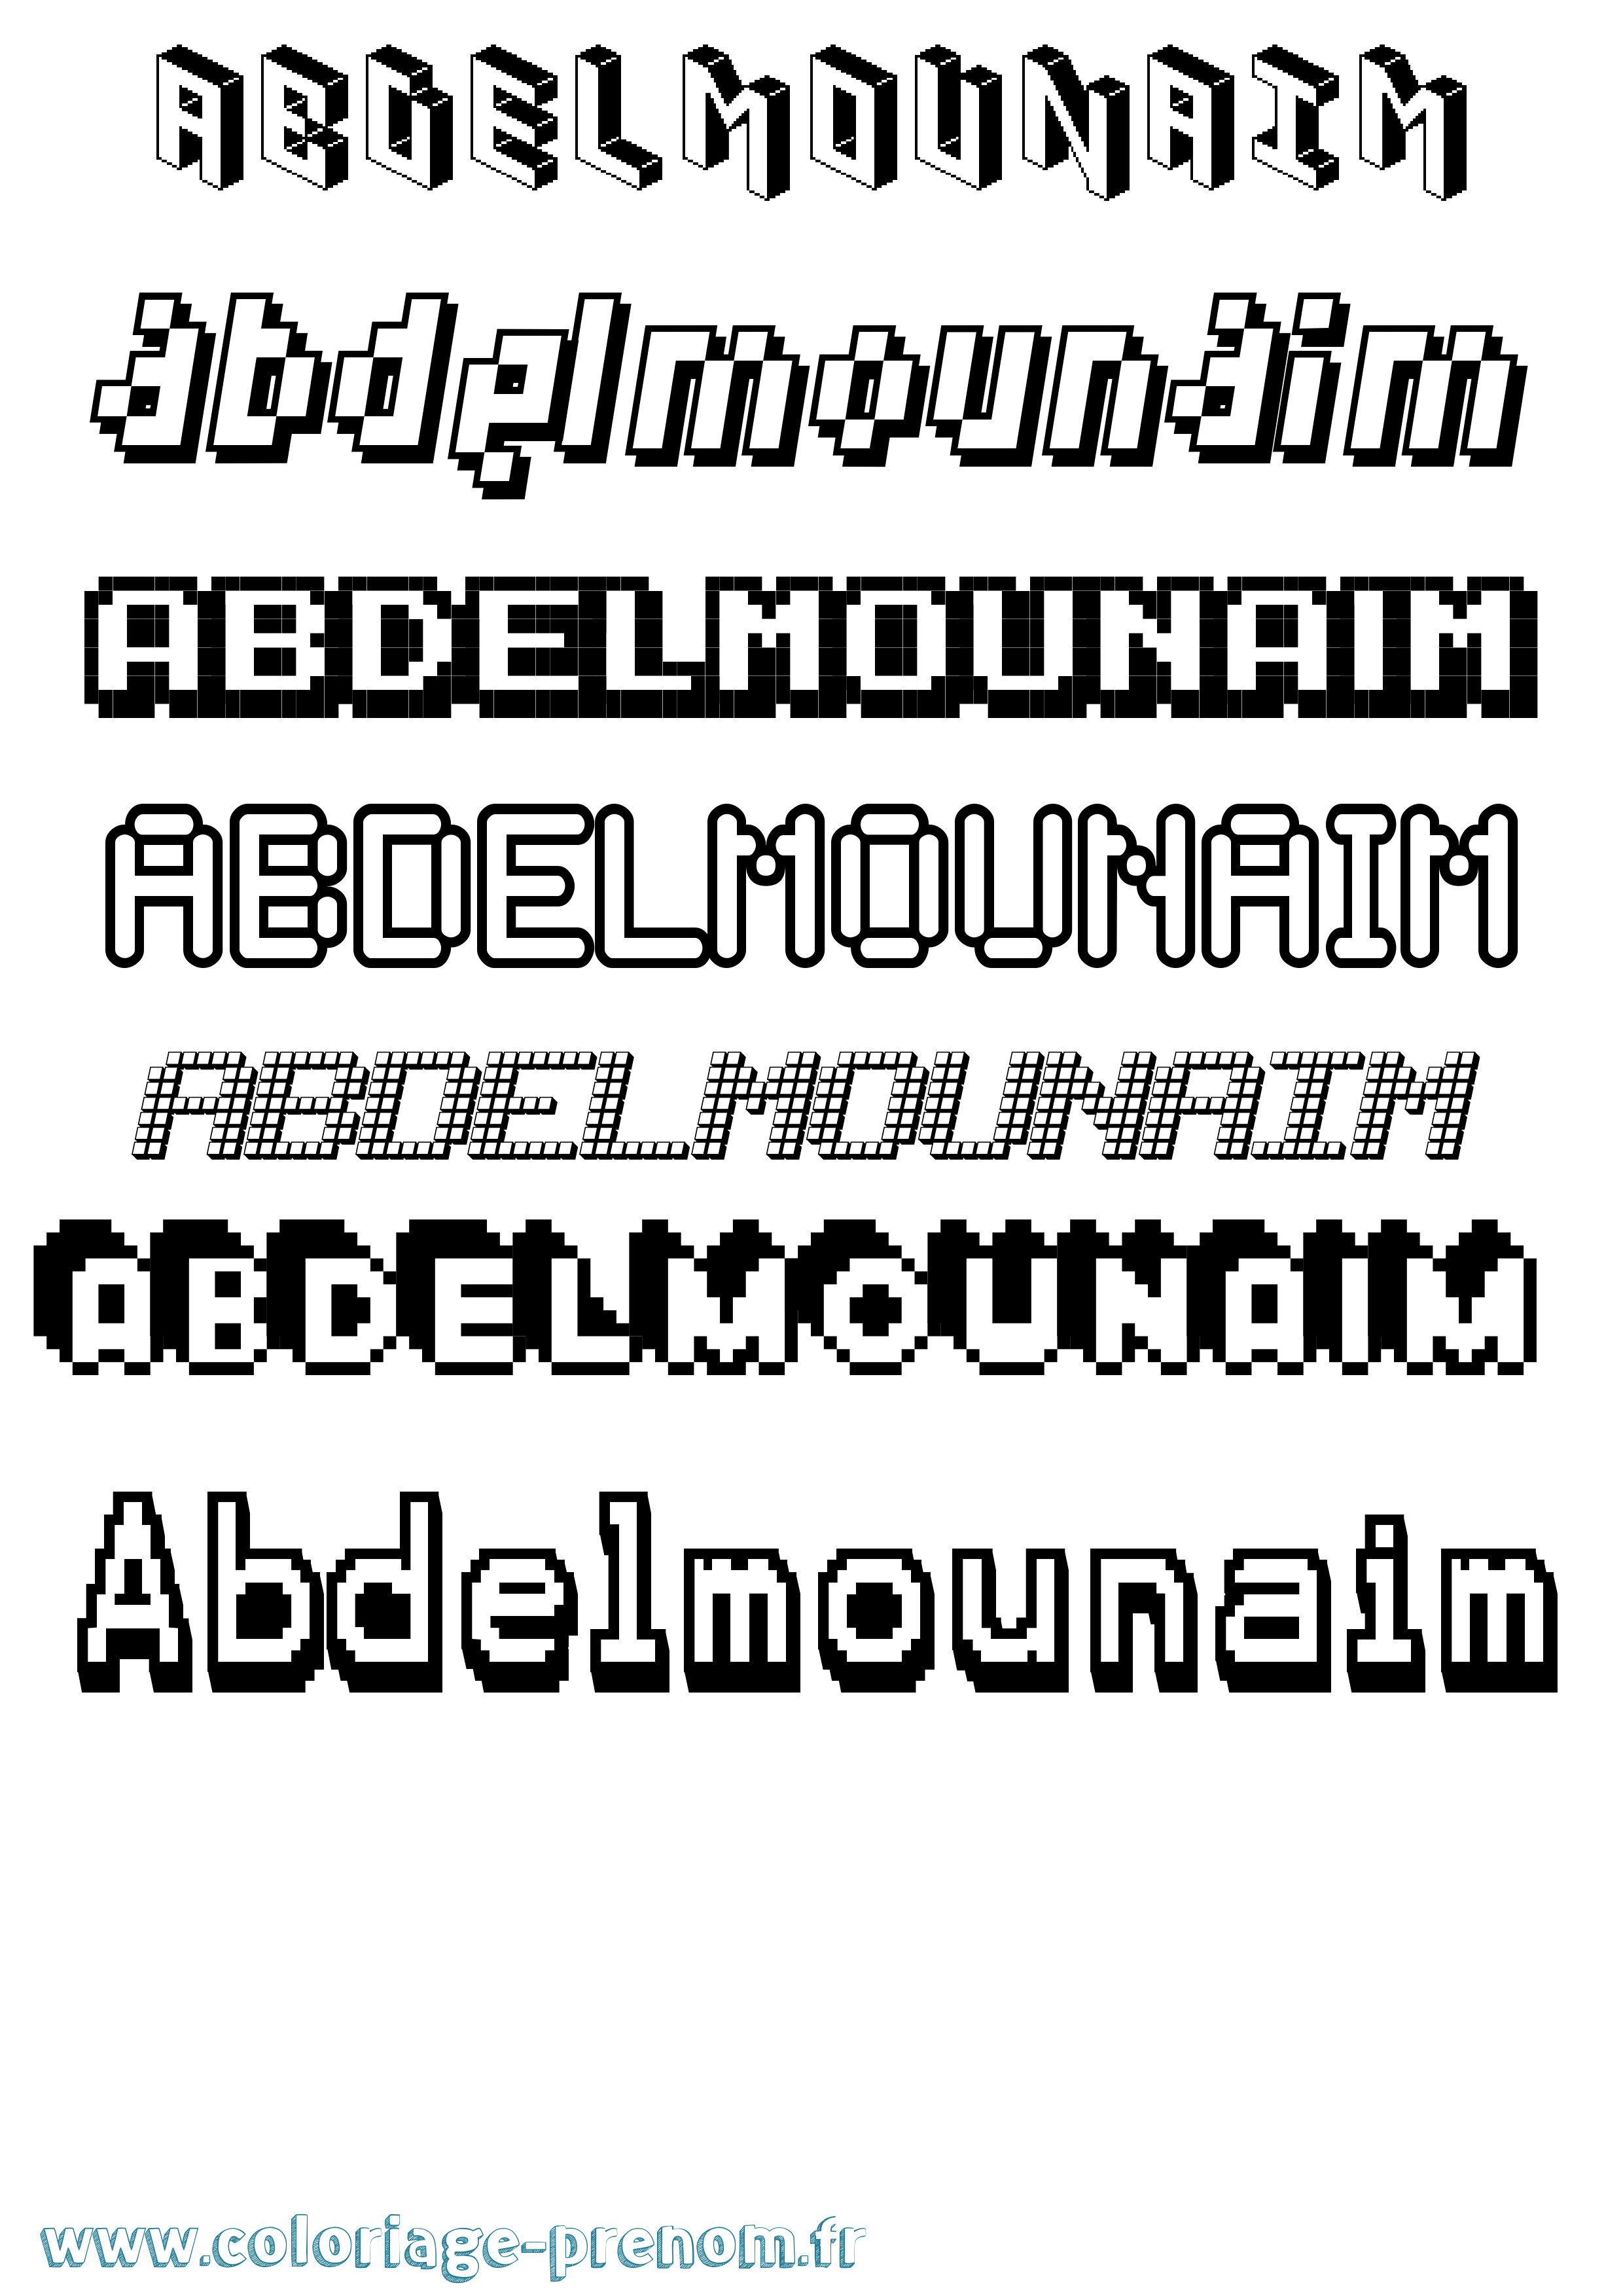 Coloriage prénom Abdelmounaim Pixel